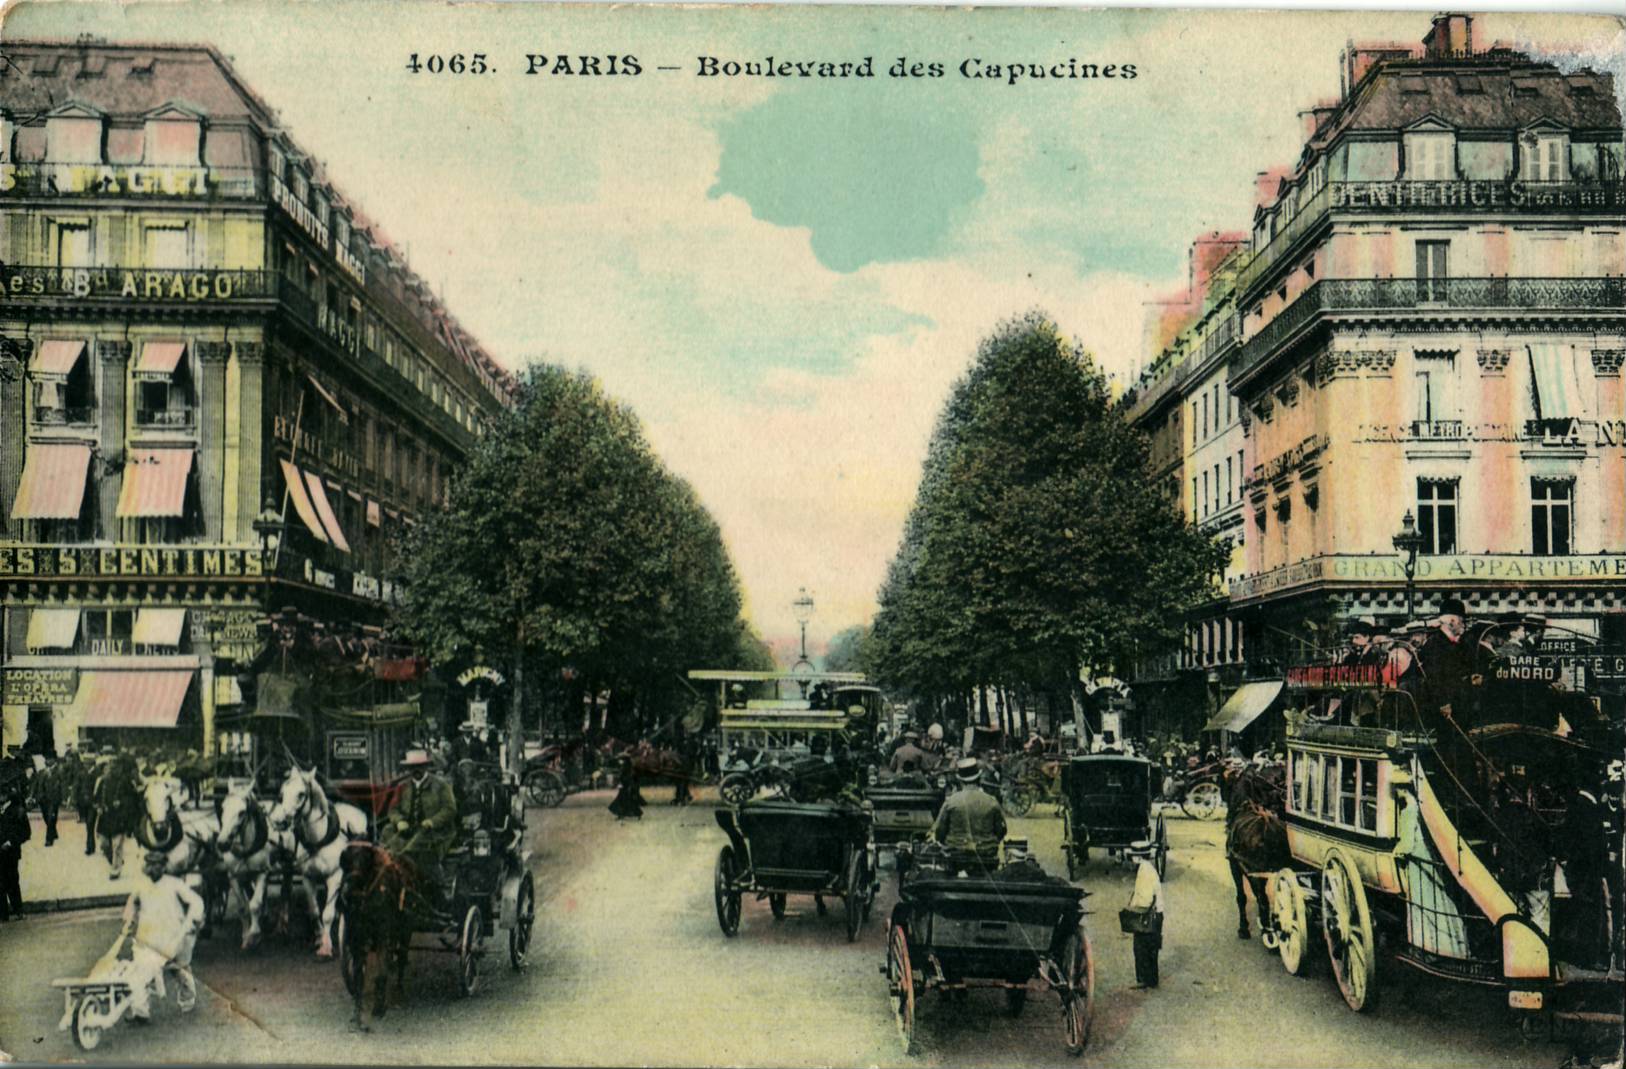 Boulevard des Capucines - Wikipedia